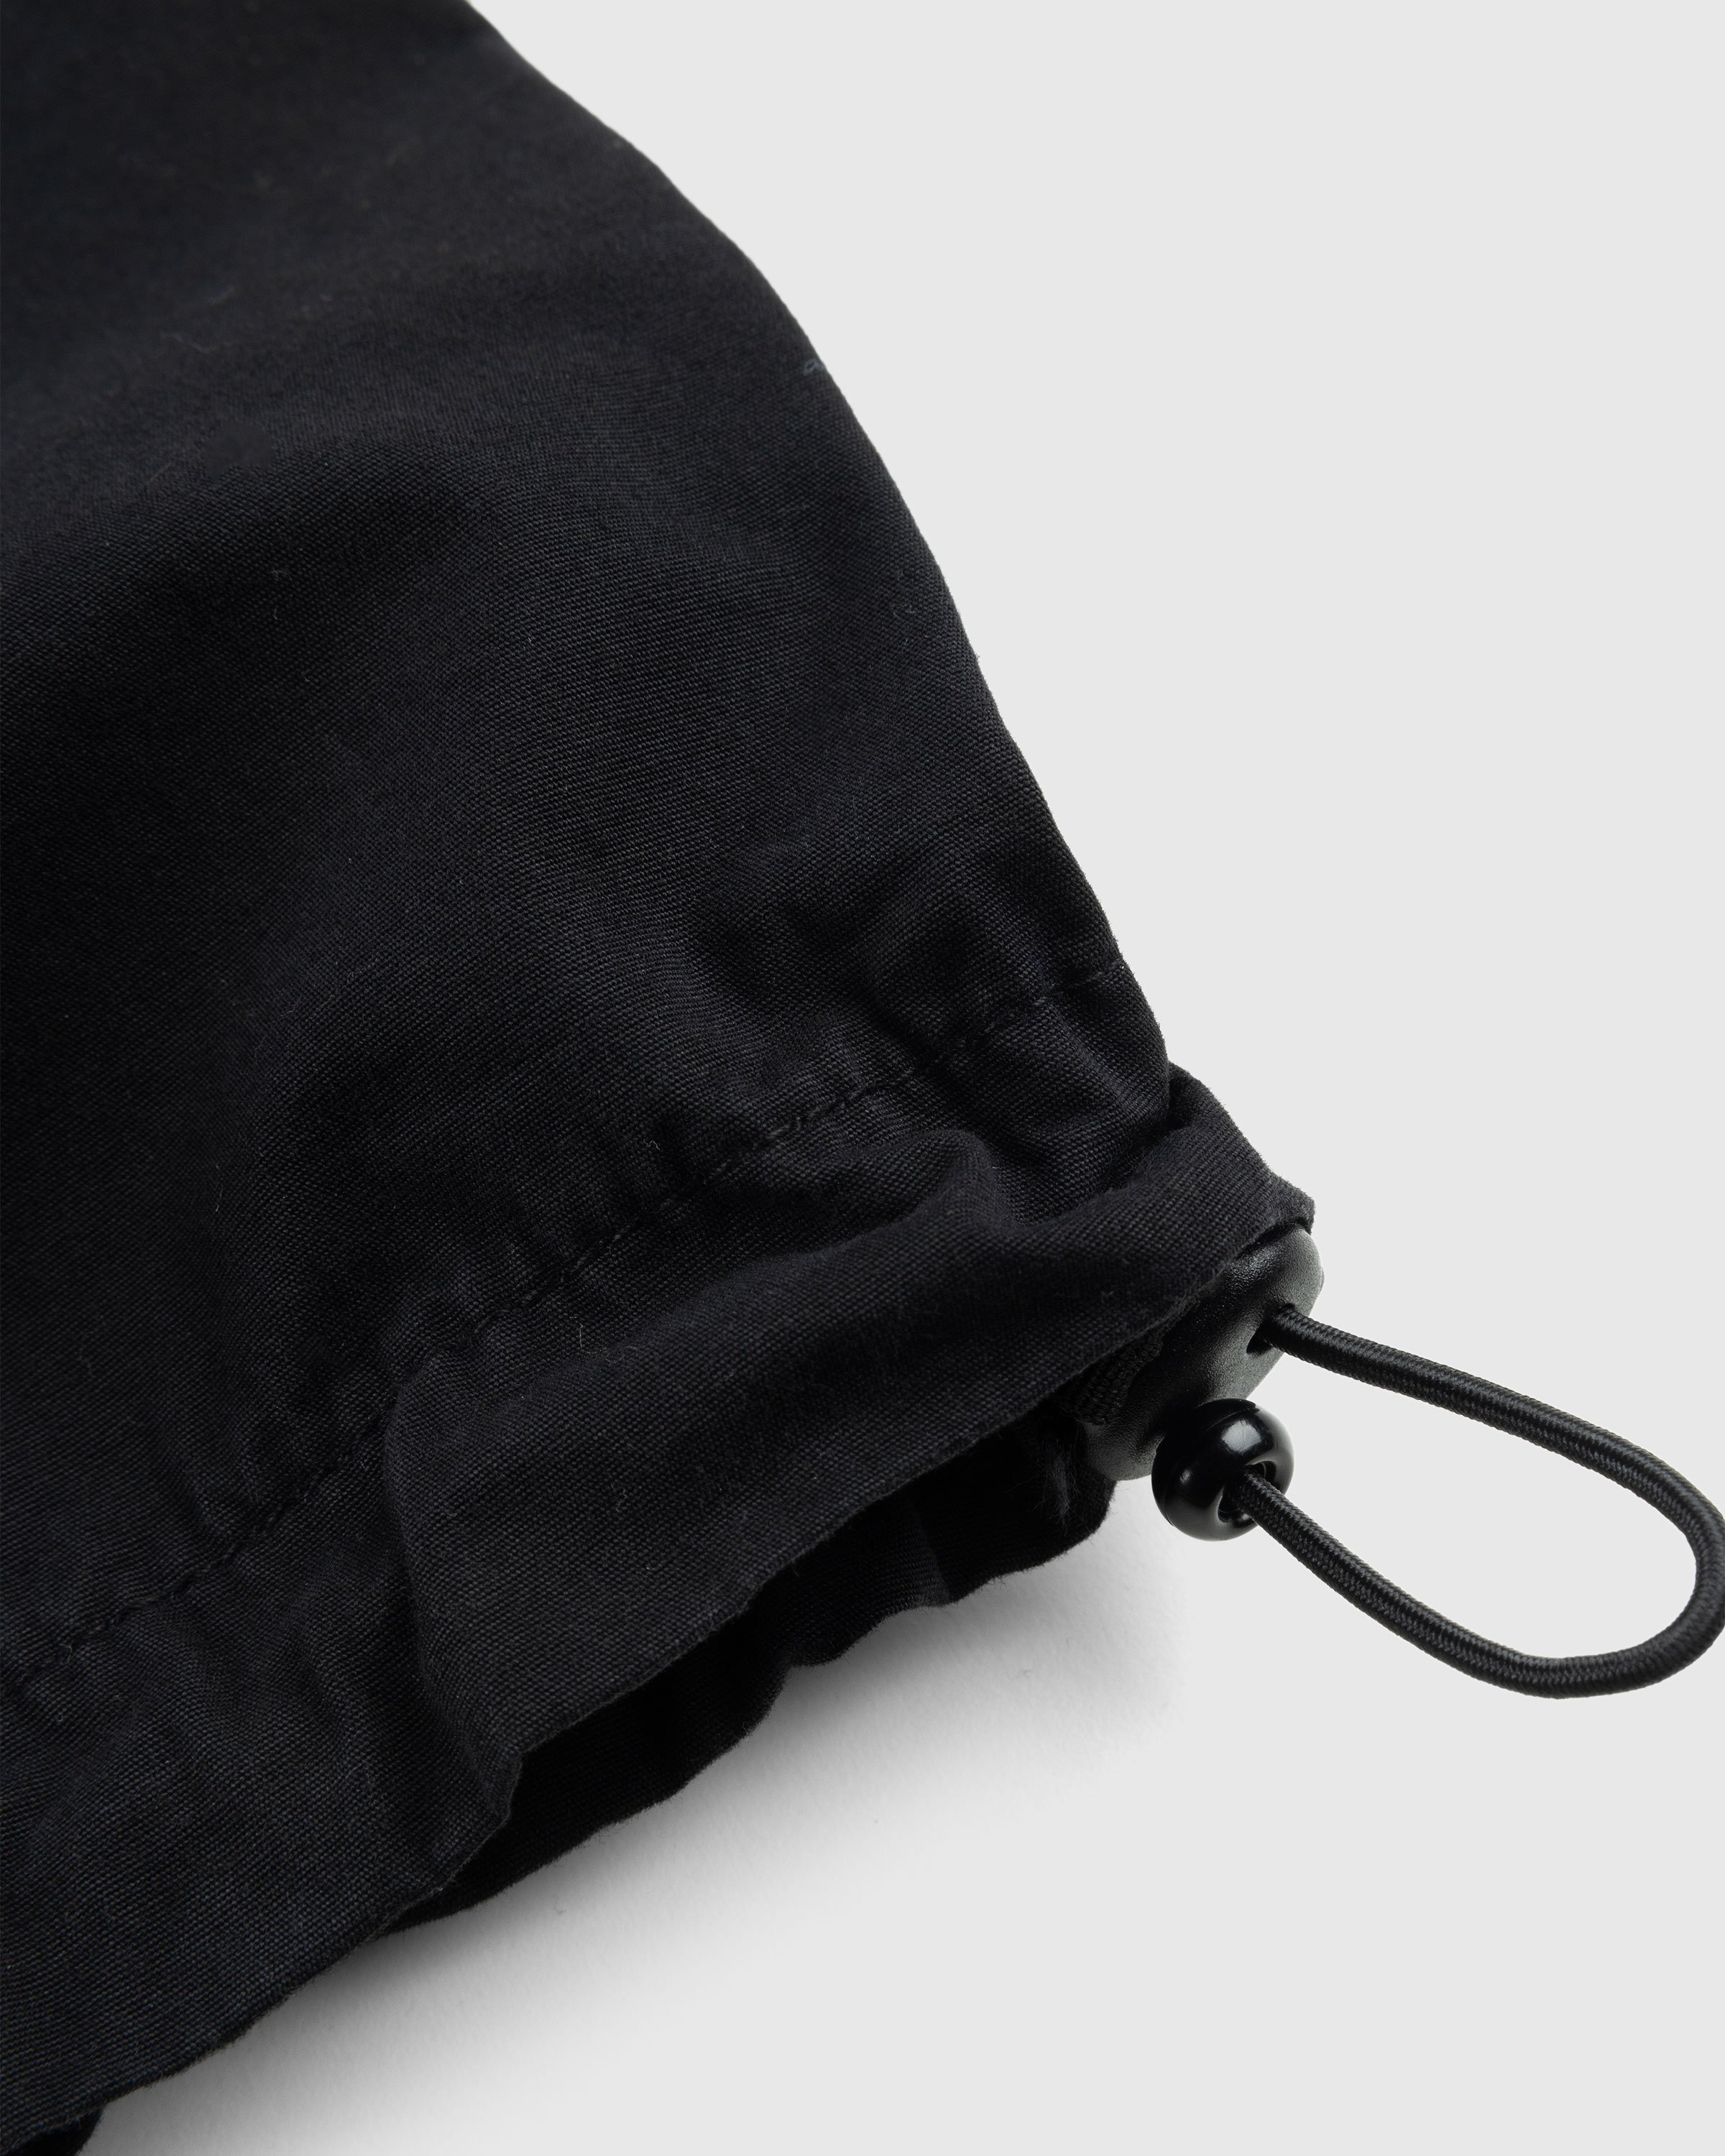 Carhartt WIP - Judd Pant Black /garment dyed - Clothing - Black - Image 7